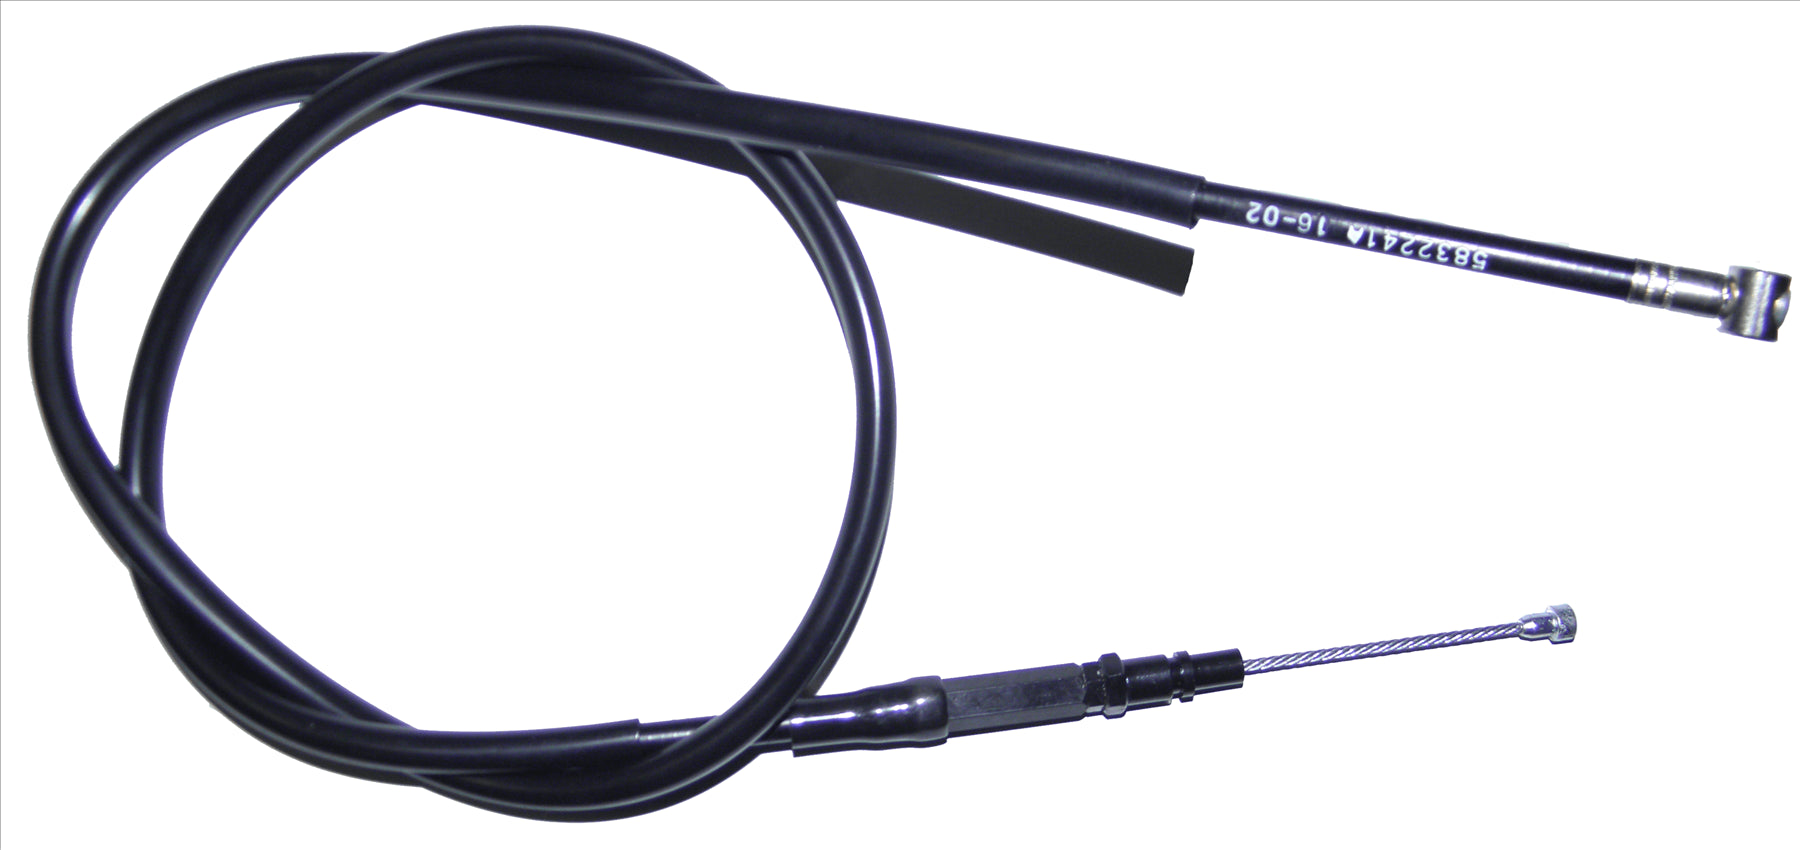 Apico Black Clutch Cable For Yamaha YZ 250 2004-2008